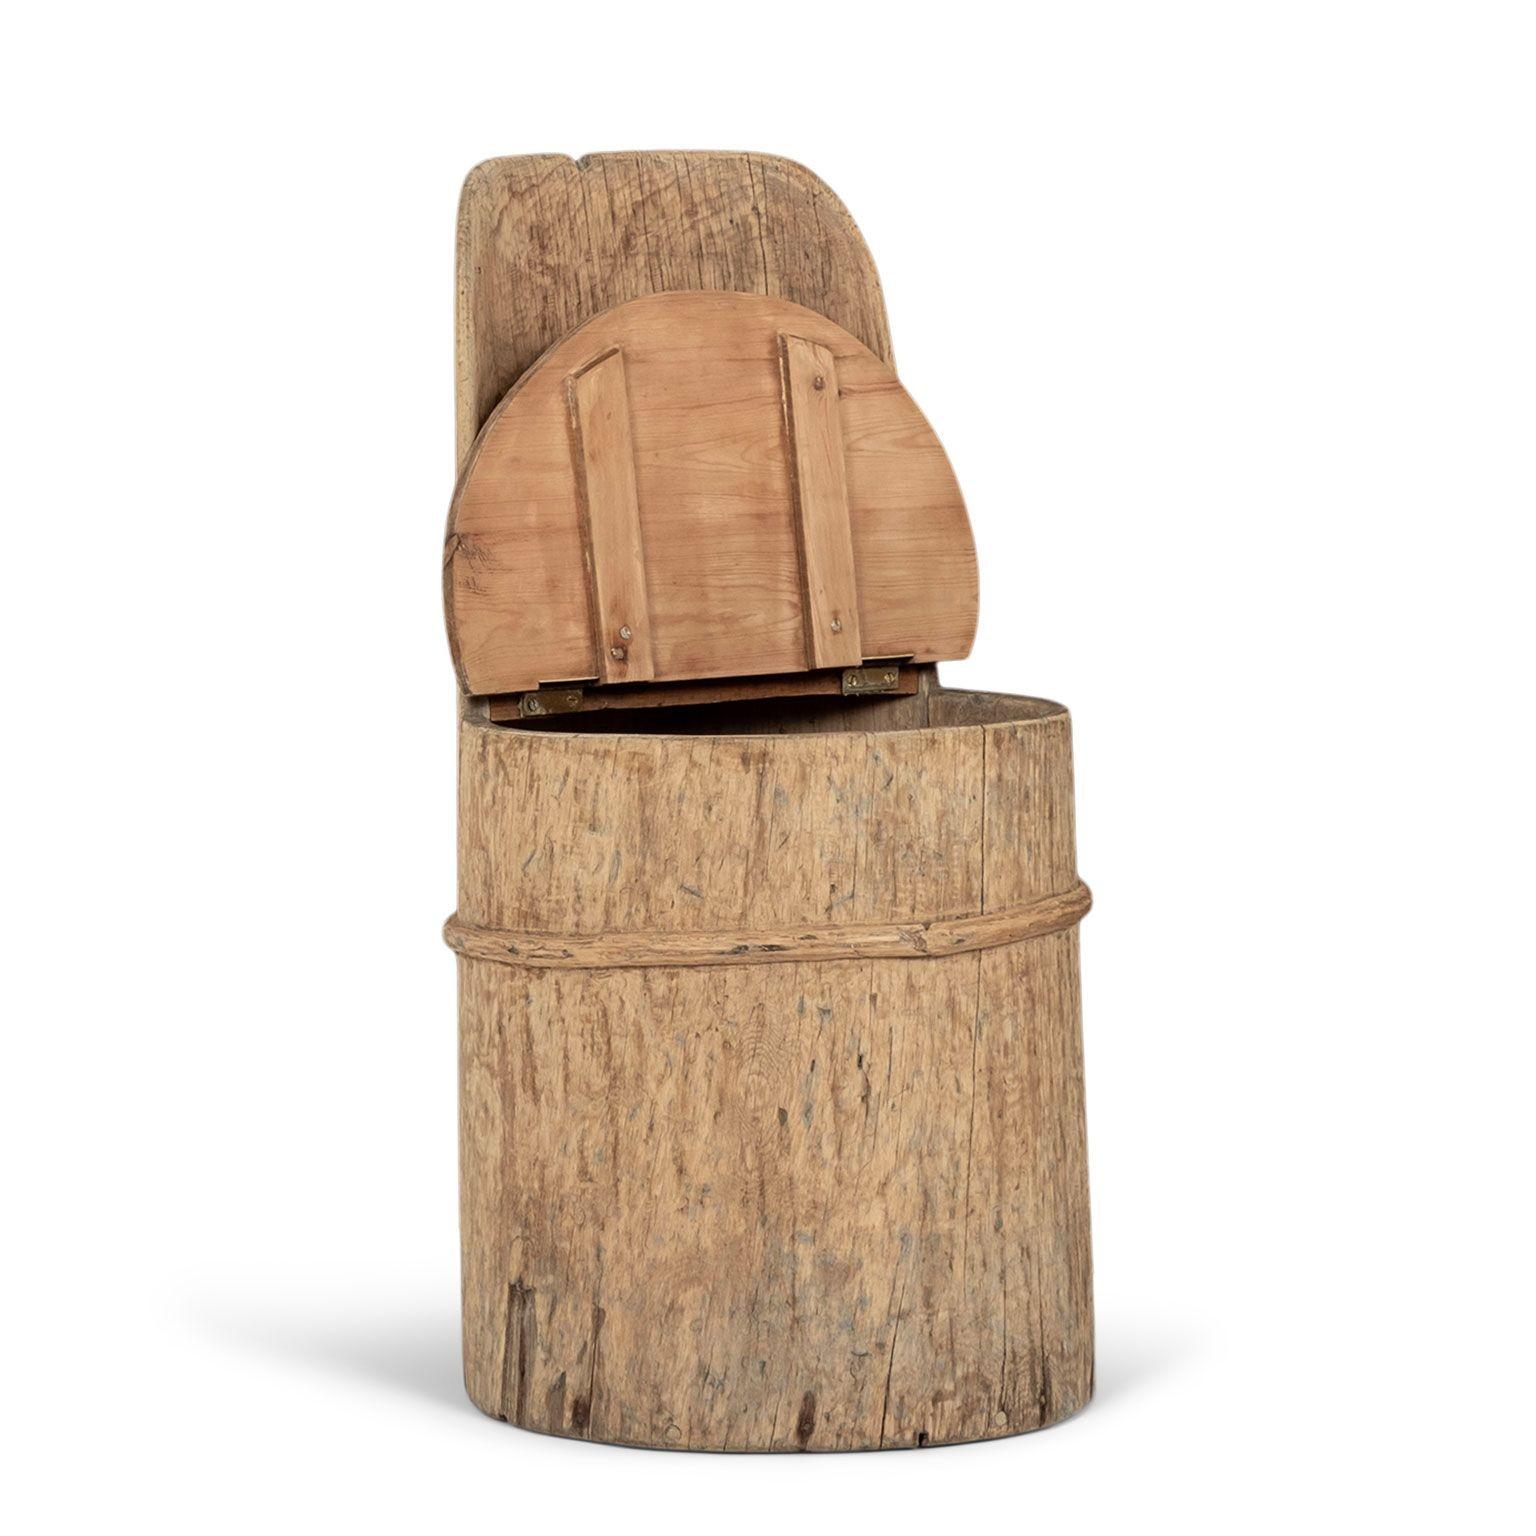 Primitive Swedish Pine Log Chair or Kubbestol For Sale 1